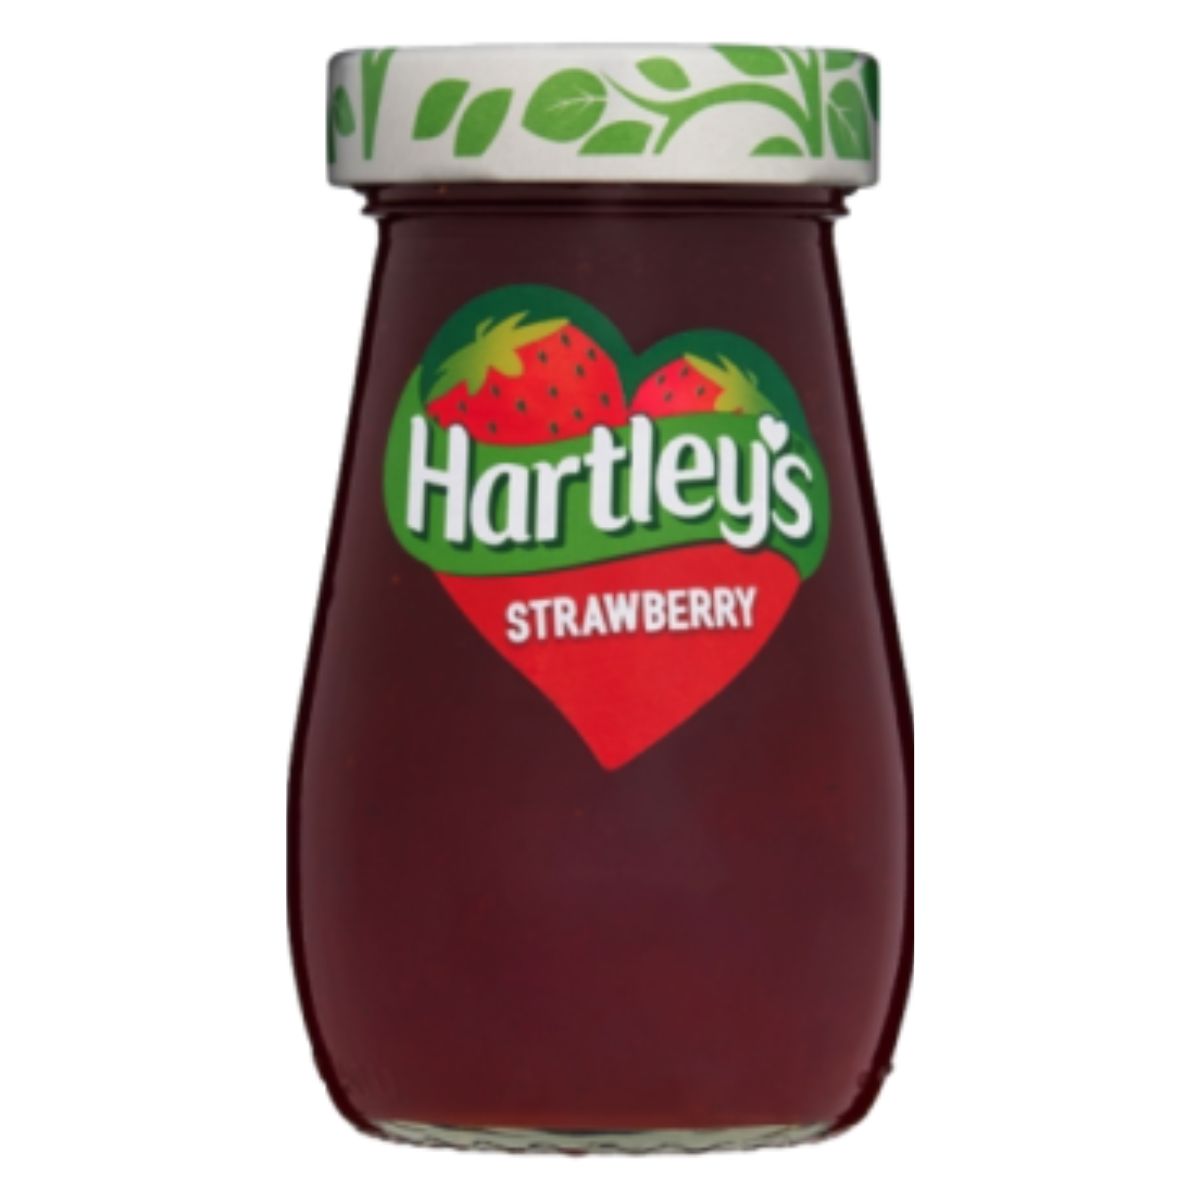 A jar of Hartleys - Strawberry Jam - 300g.